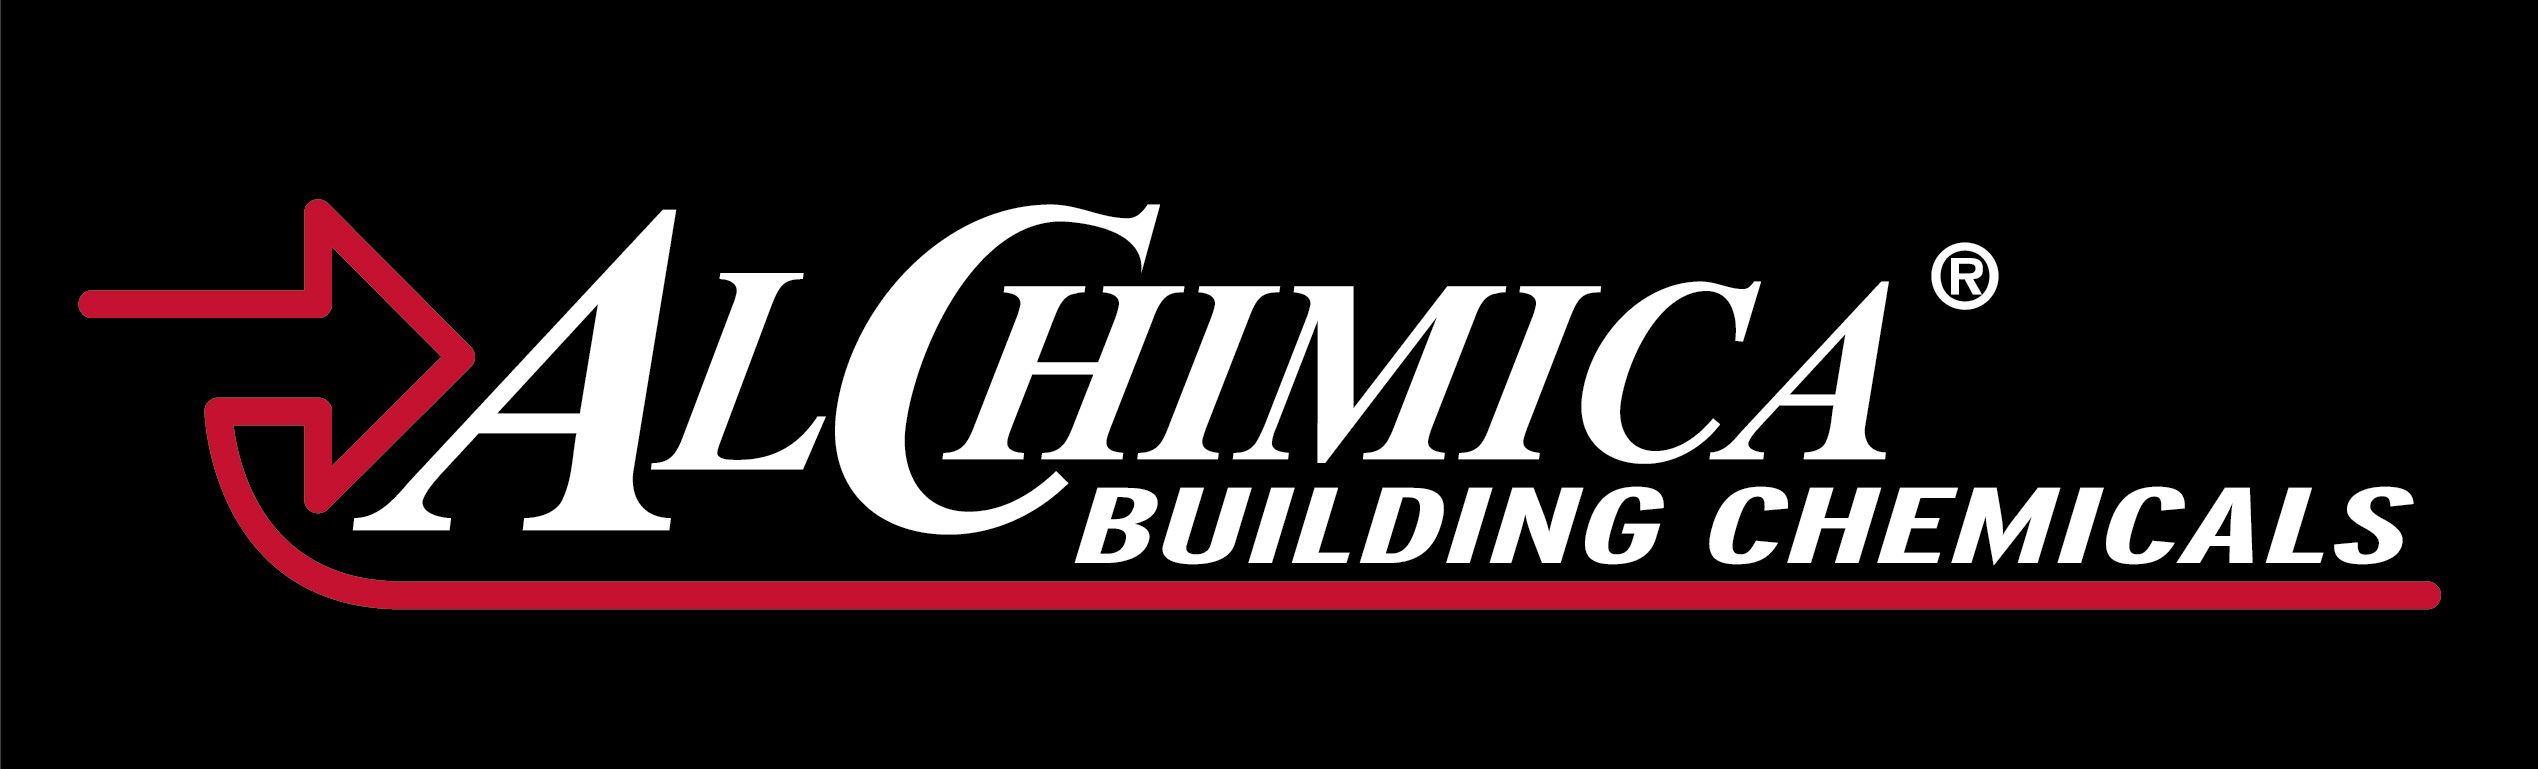 Alchimica  Building Chemicals Ltd